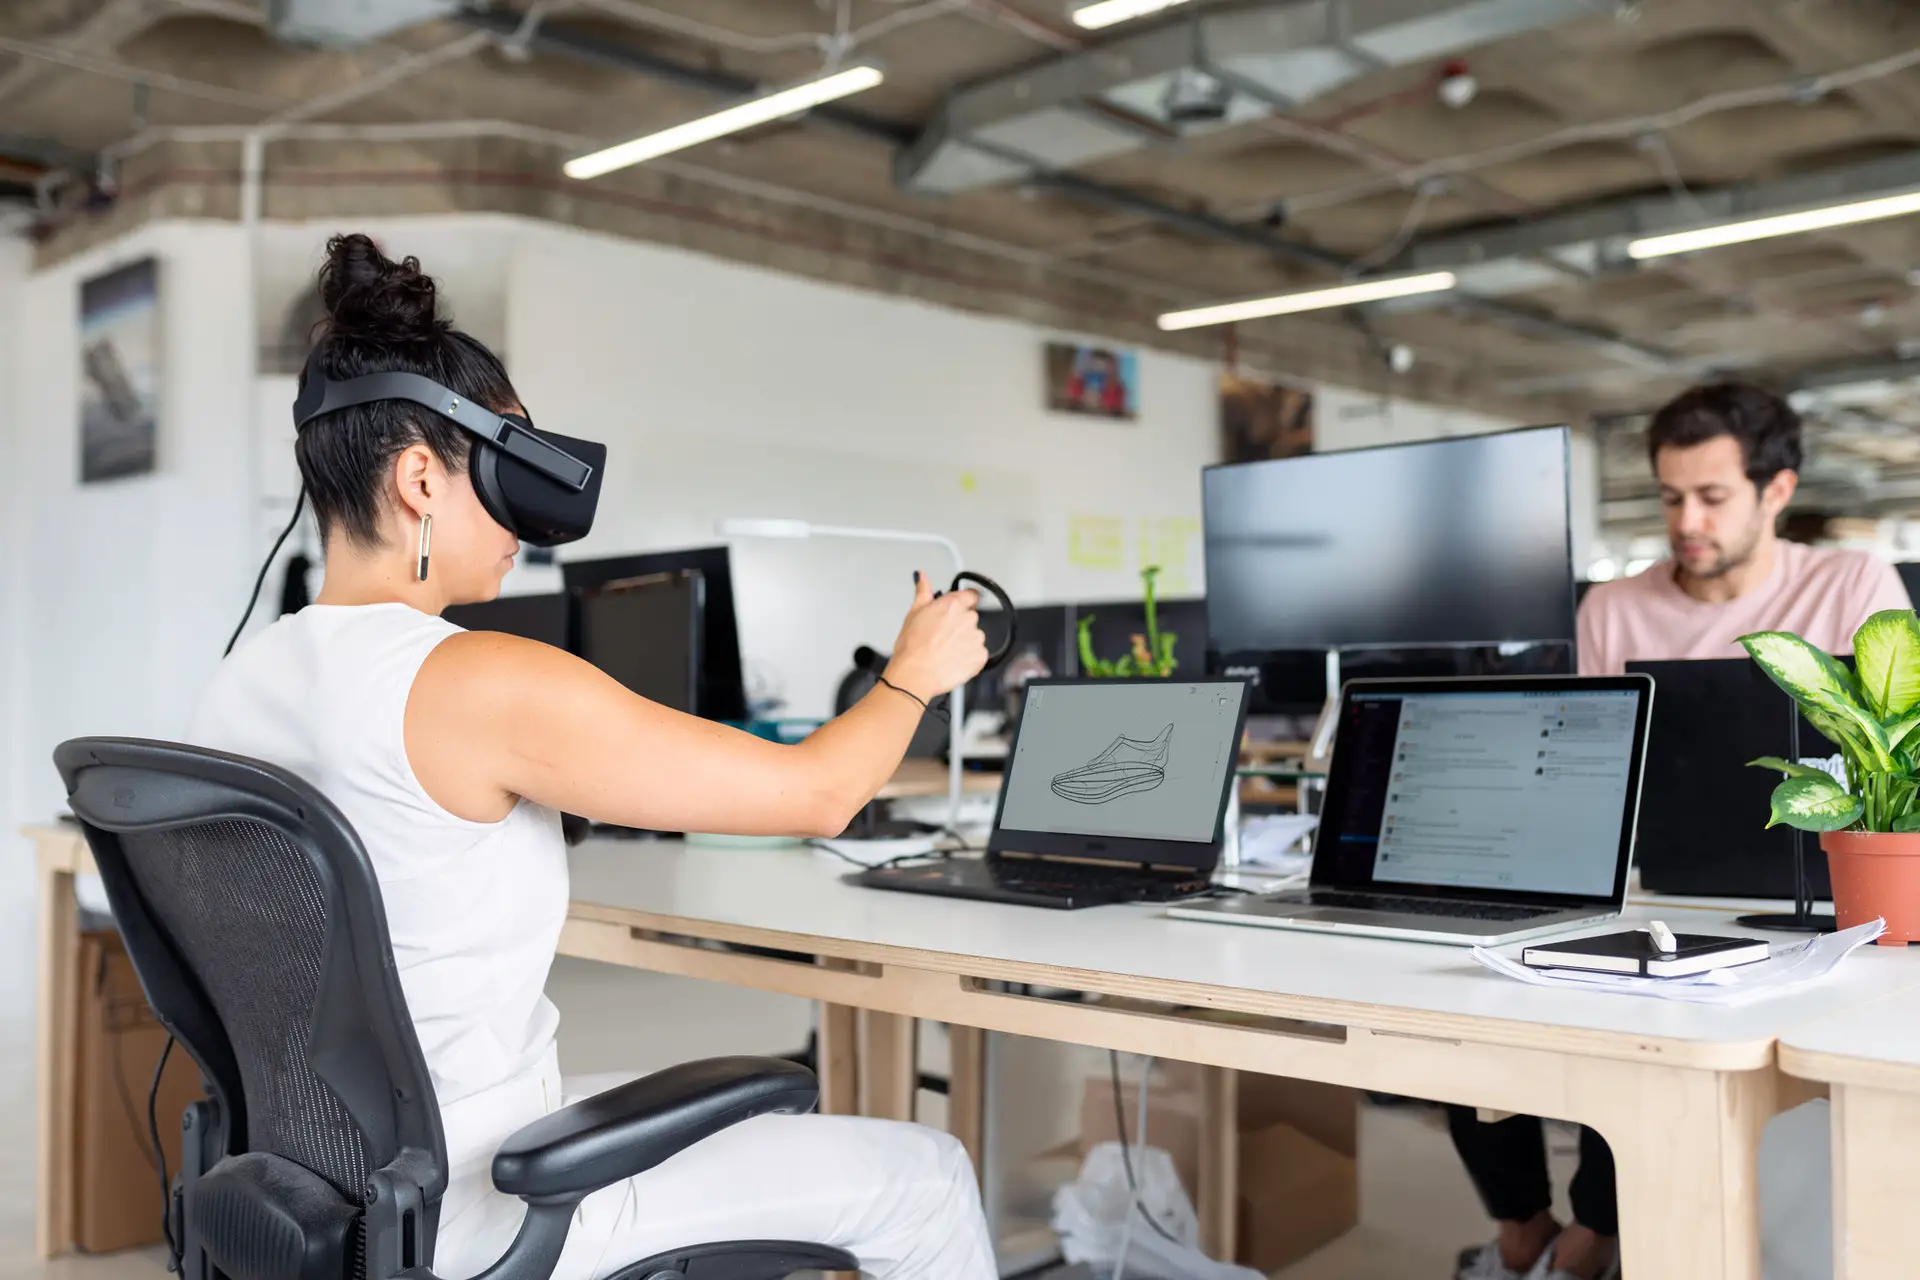 ‘Rising Company of the Year 2020’ Virtual Reality Award Goes to Klip VR